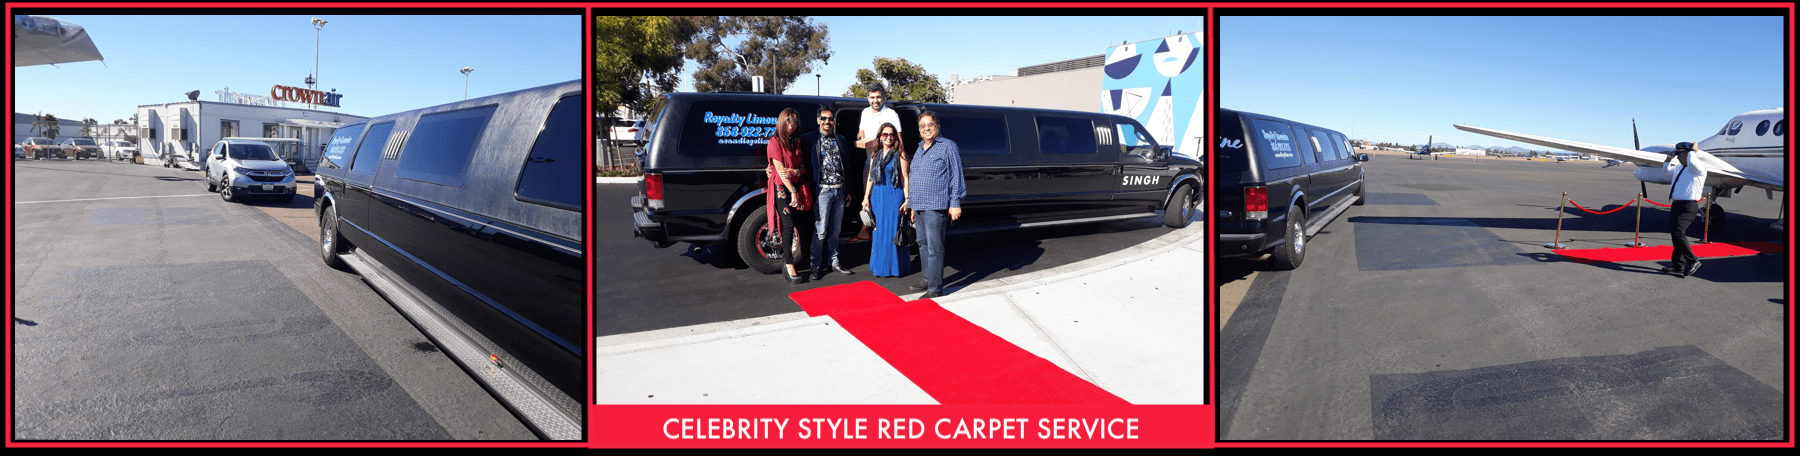 celebrity red carpet transportation service